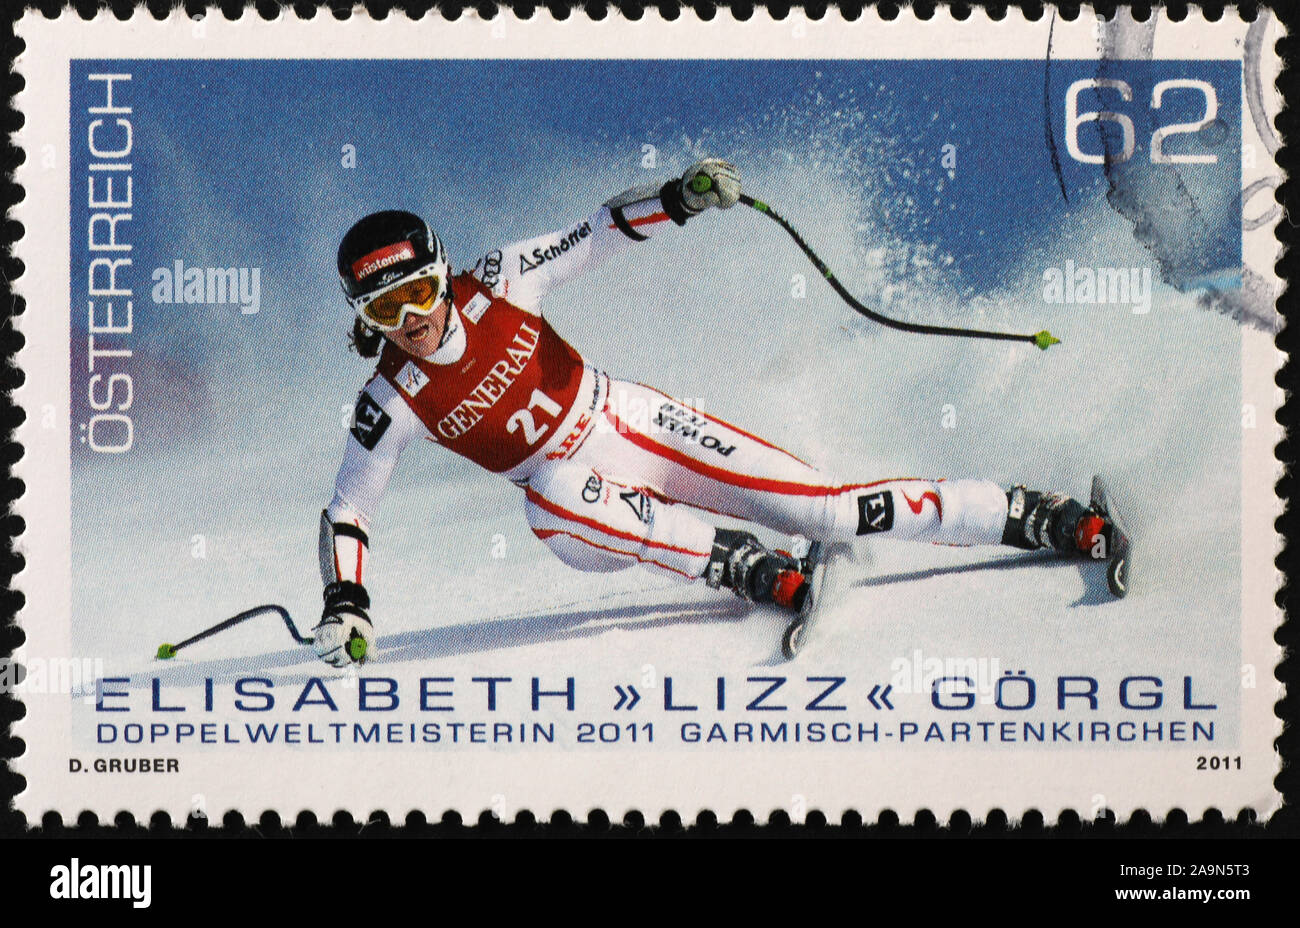 Ski racer Elizabeth Gorgl on austrian postage stamp Stock Photo